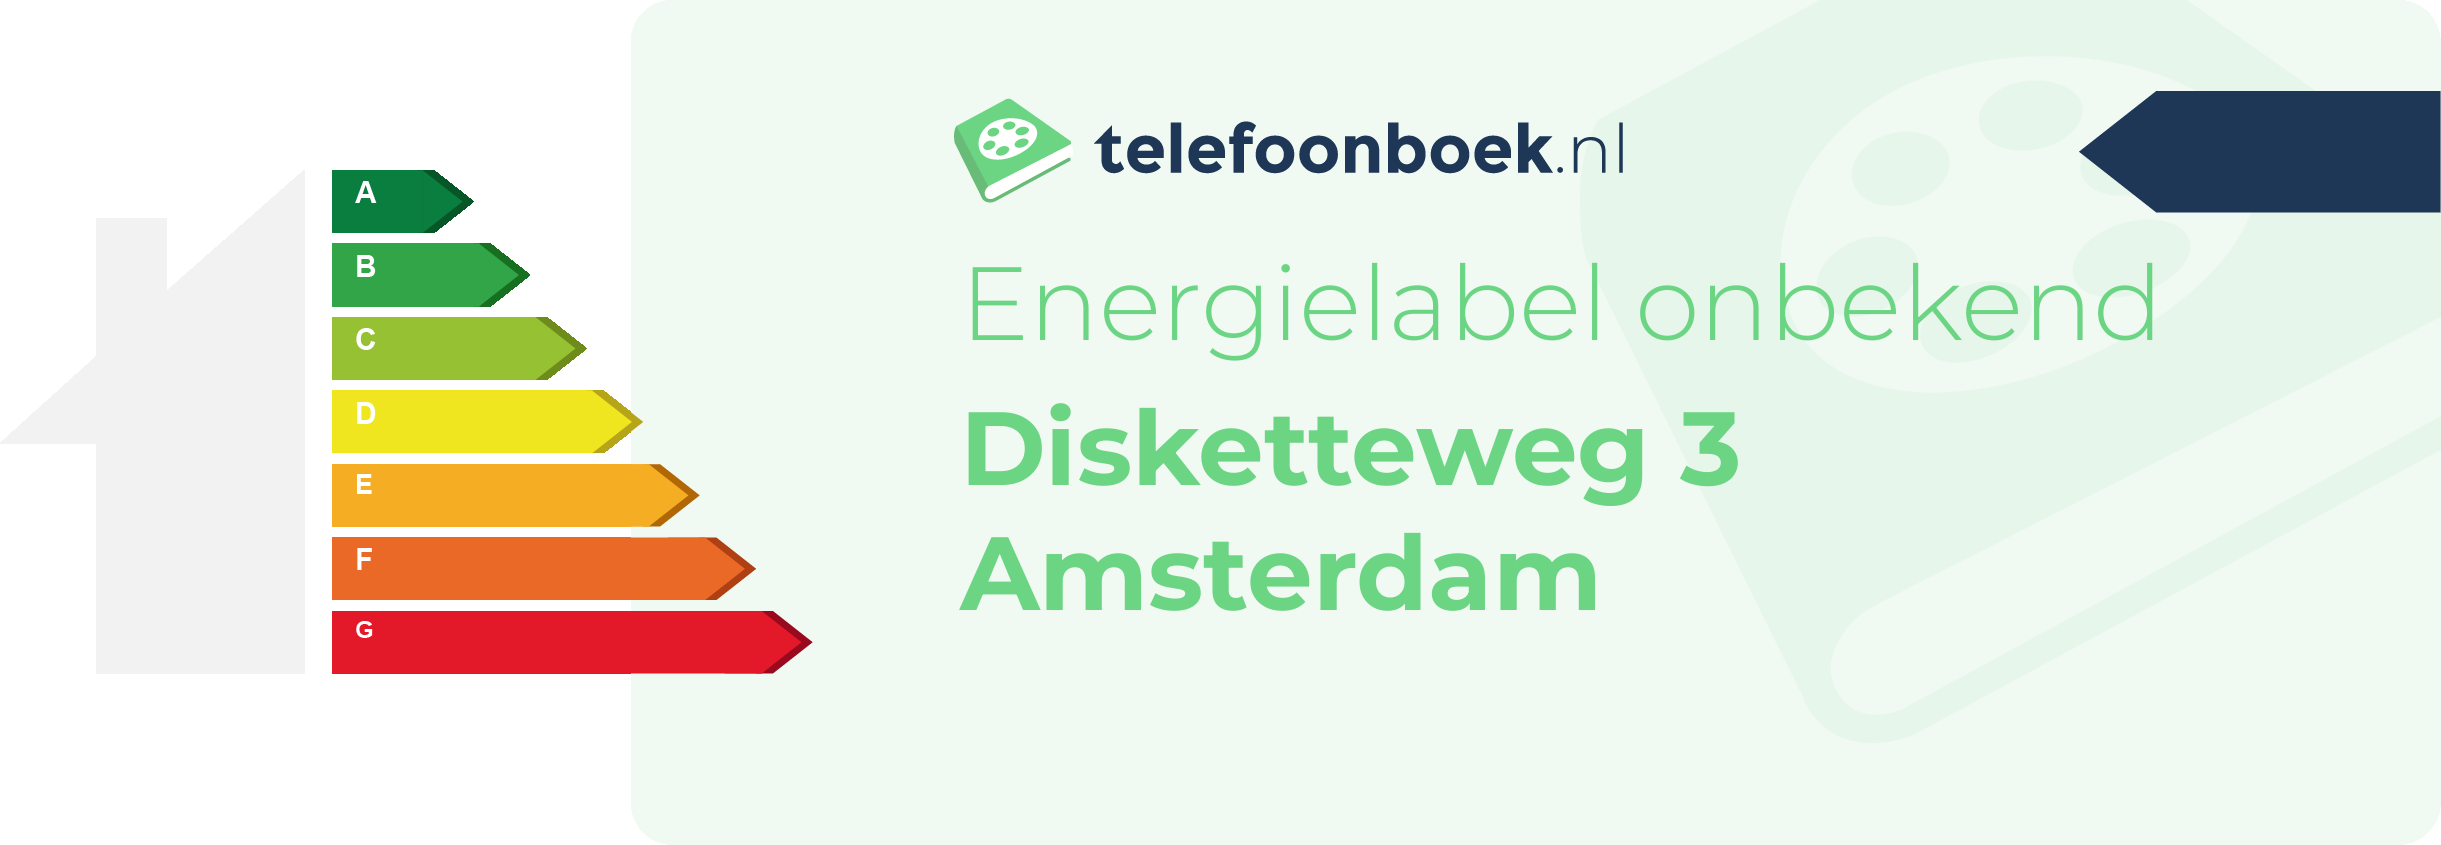 Energielabel Disketteweg 3 Amsterdam